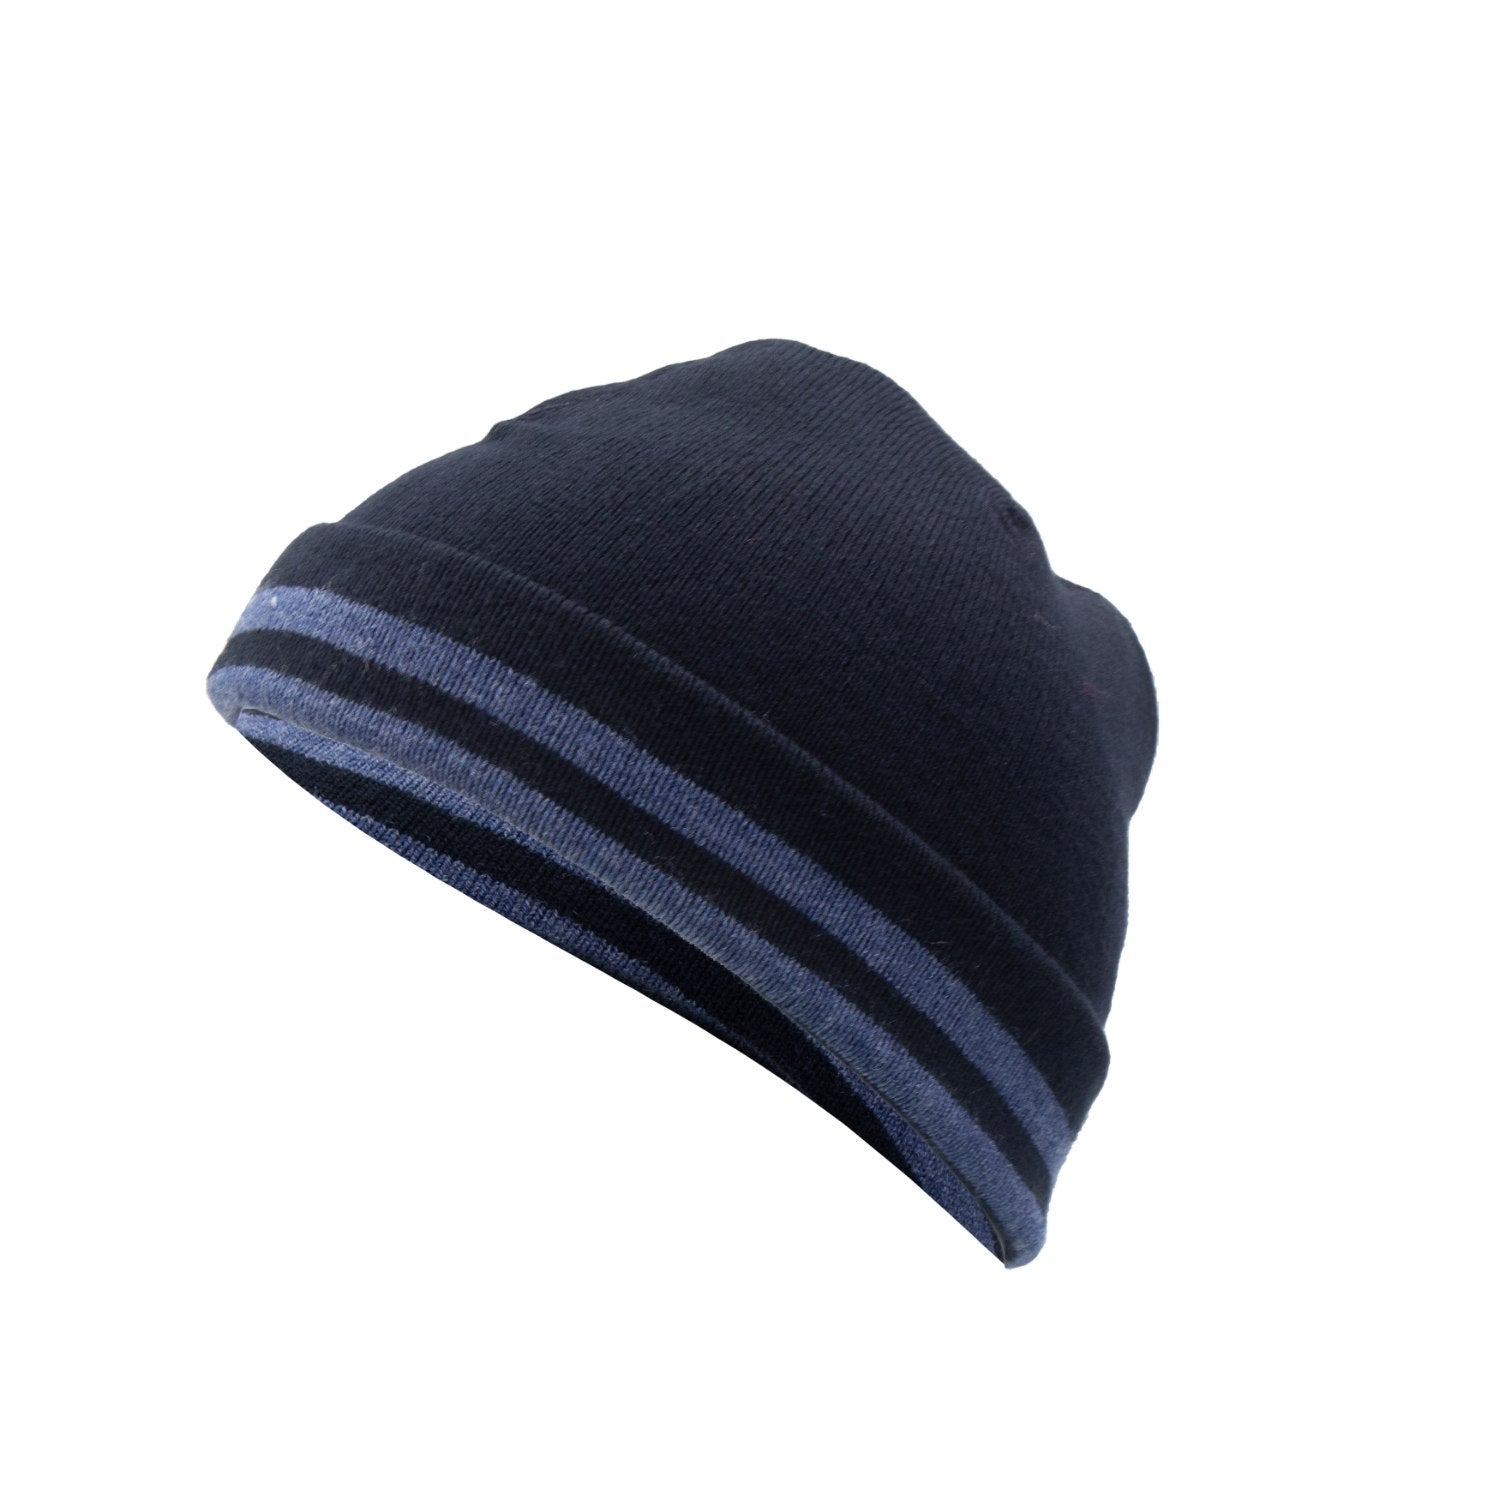 Buy Gokyo Kaza Beanie Reversible Winter Cap Navy Blue | Beanies at Gokyo Outdoor Clothing & Gear